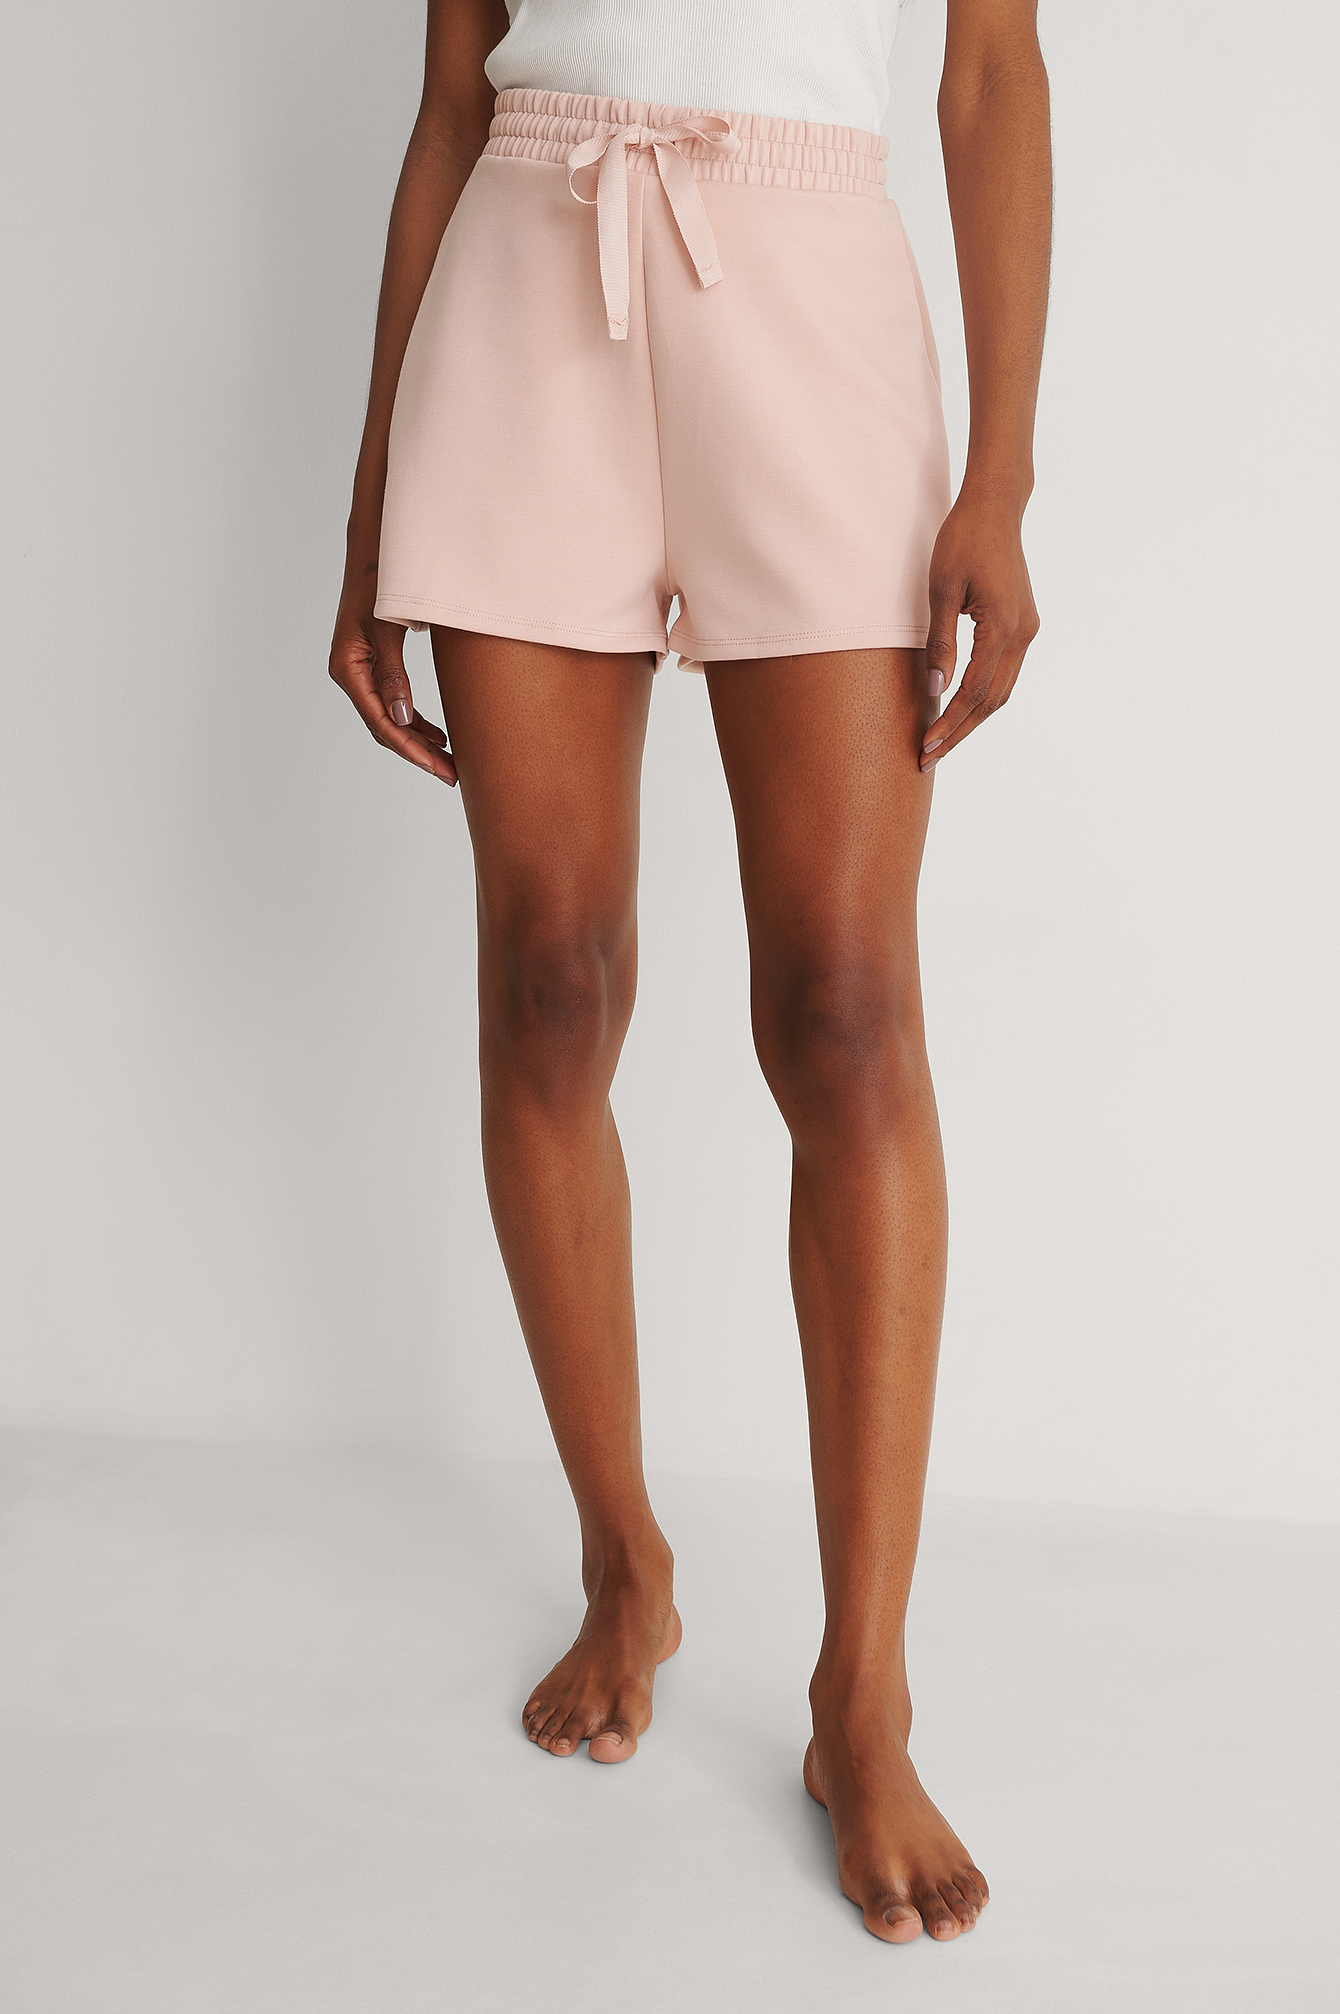 Sparen Sie 12% Damen Bekleidung Kurze Hosen Mini Shorts NA-KD Synthetik Lingerie Kurze Hose Mit Spitze in Pink 